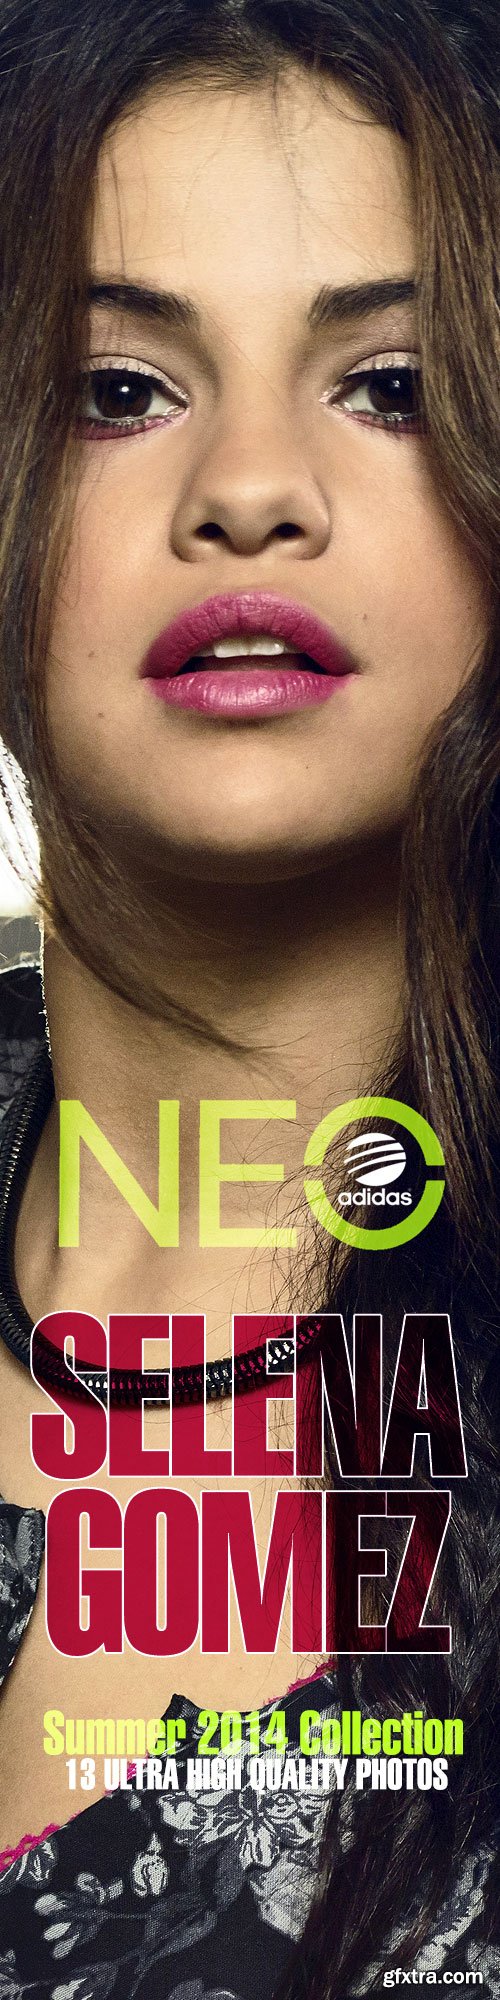 Selena Gomez - Adidas NEO Summer 2014 Collection AD Shoot